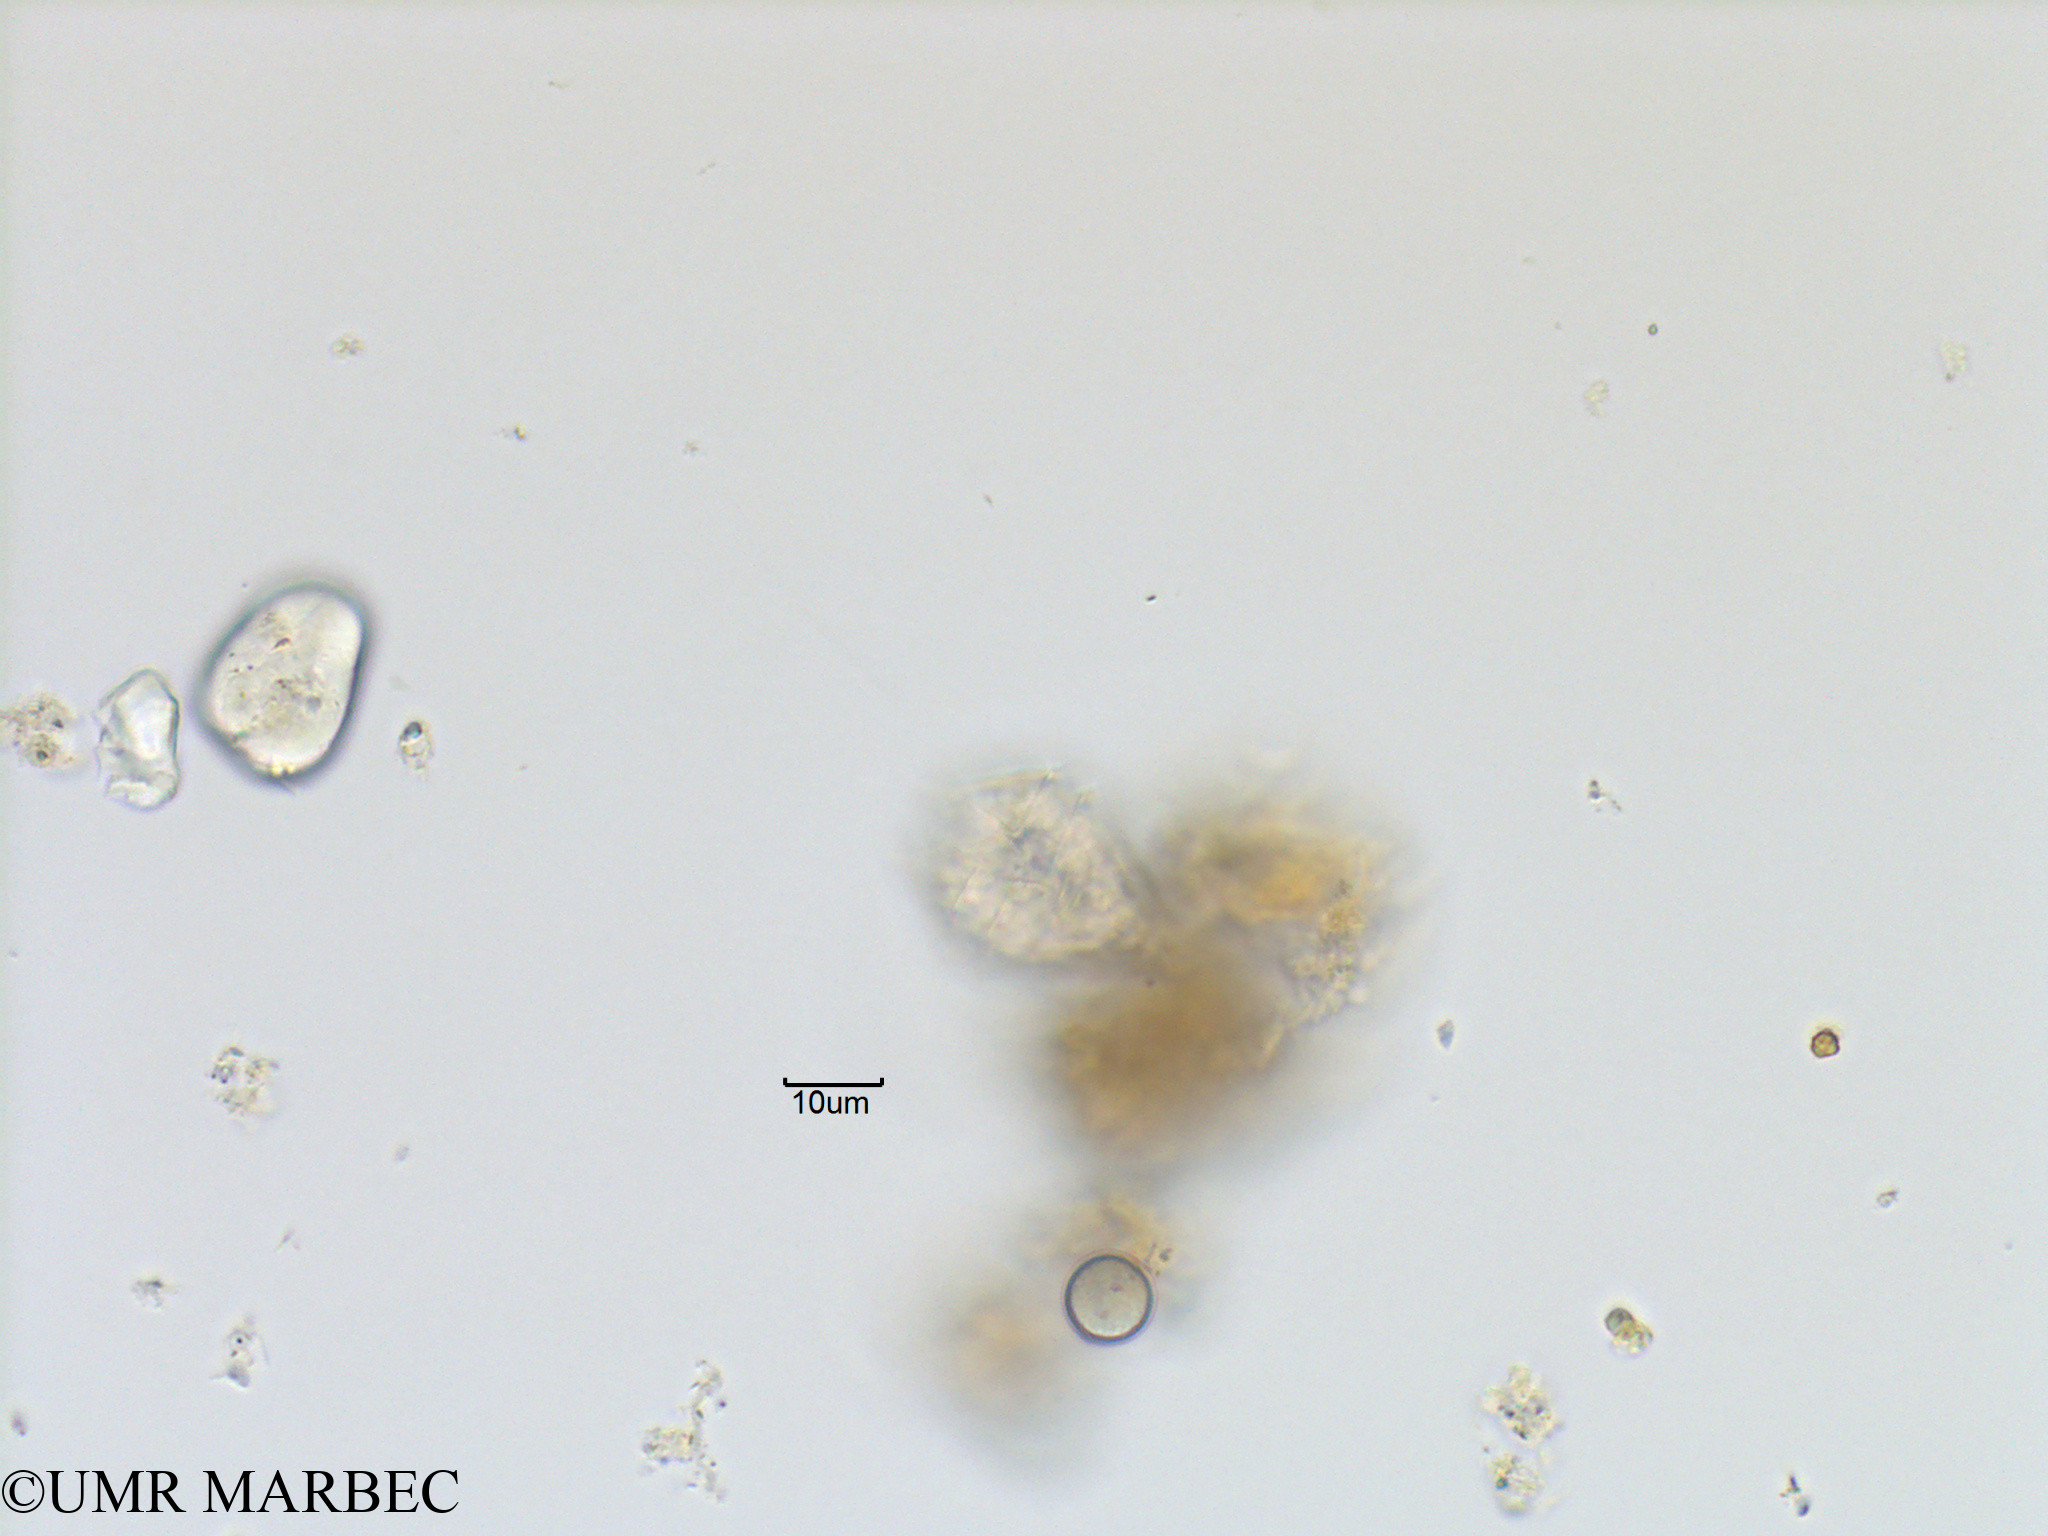 phyto/Bizerte/bizerte_lagoon/RISCO November 2015/Scrippsiella spinifera (Protoperidinium sp15-Lagune_T1_B_Dino b-3).tif(copy).jpg